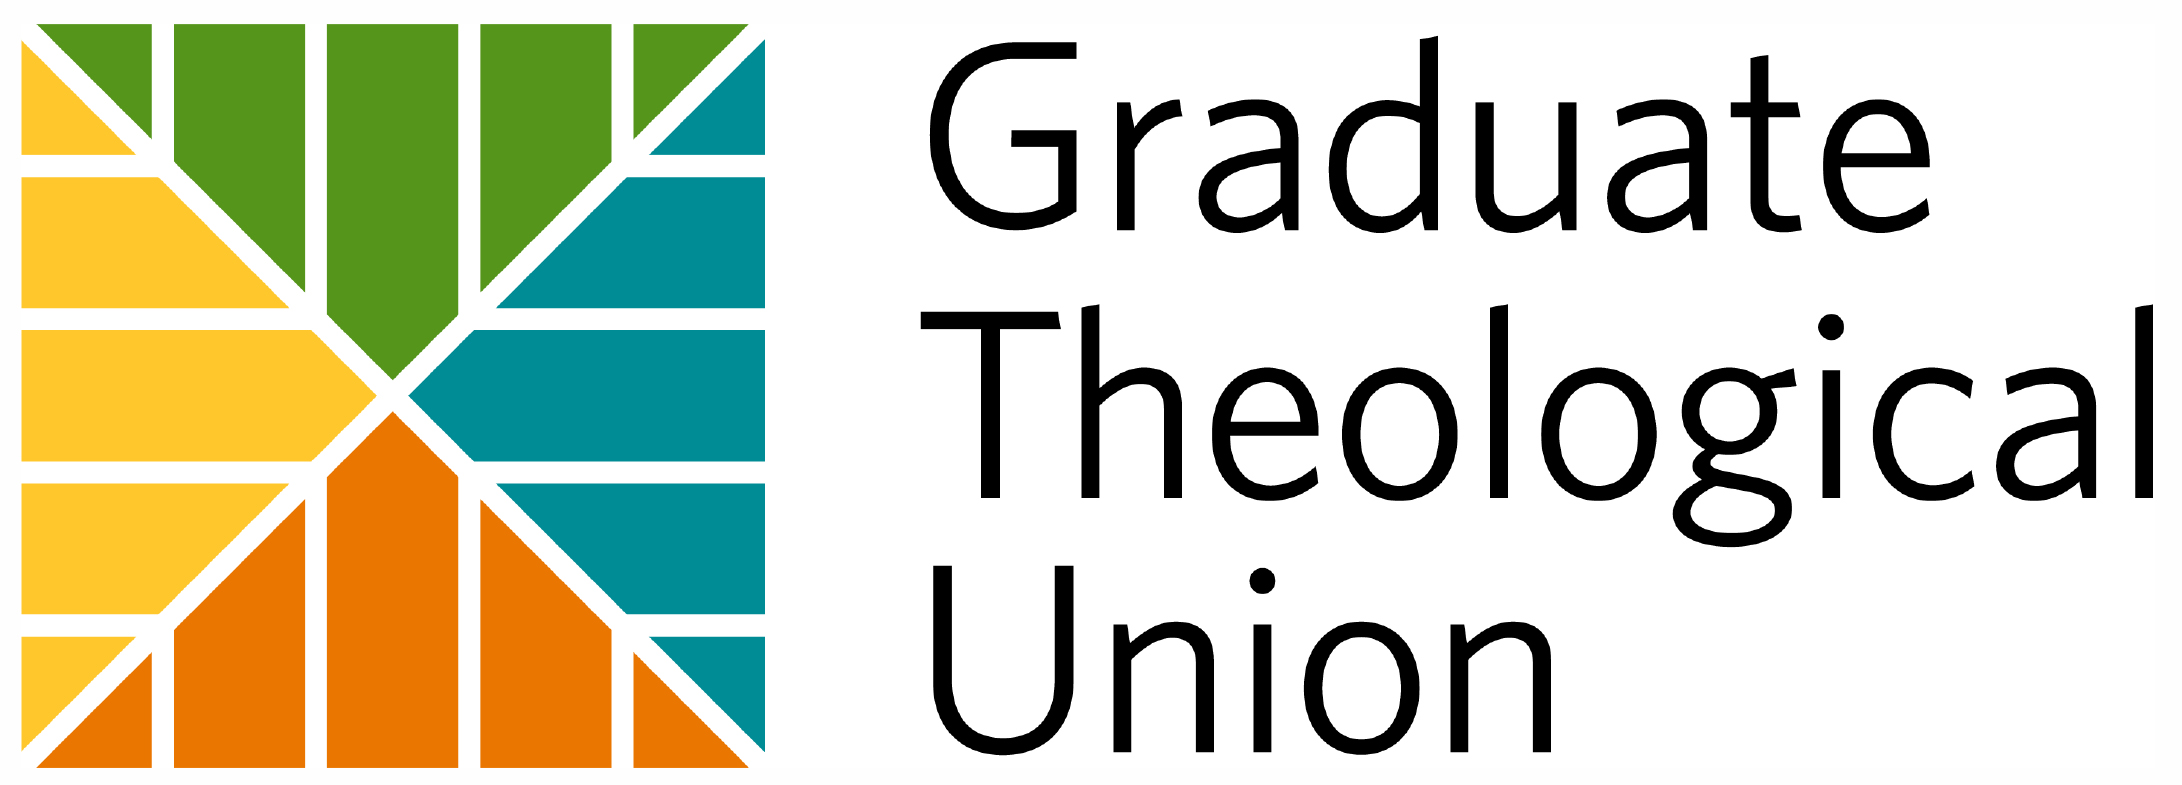 GTU formal logo